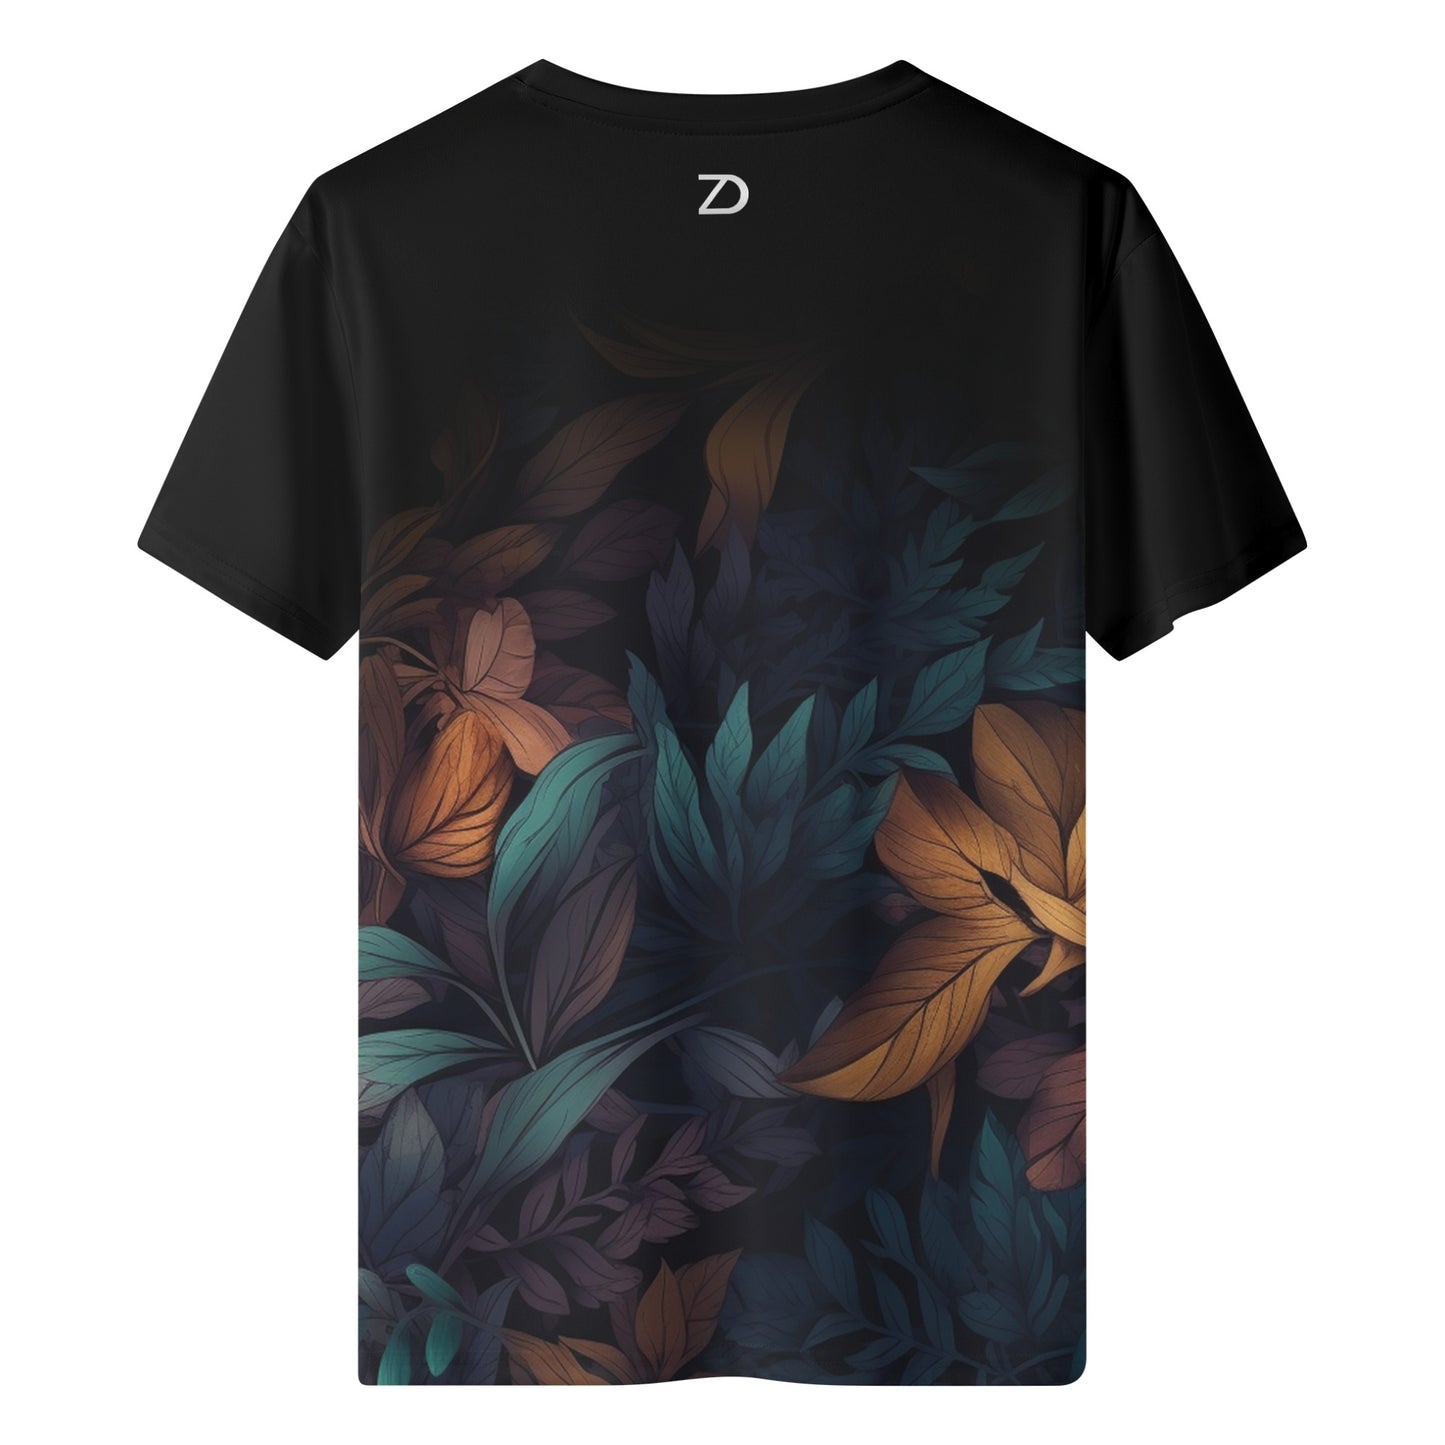 Neduz Designs Artified Autumn Leaves Mens Classic T-Shirt - Comfortable, All-Season Wear